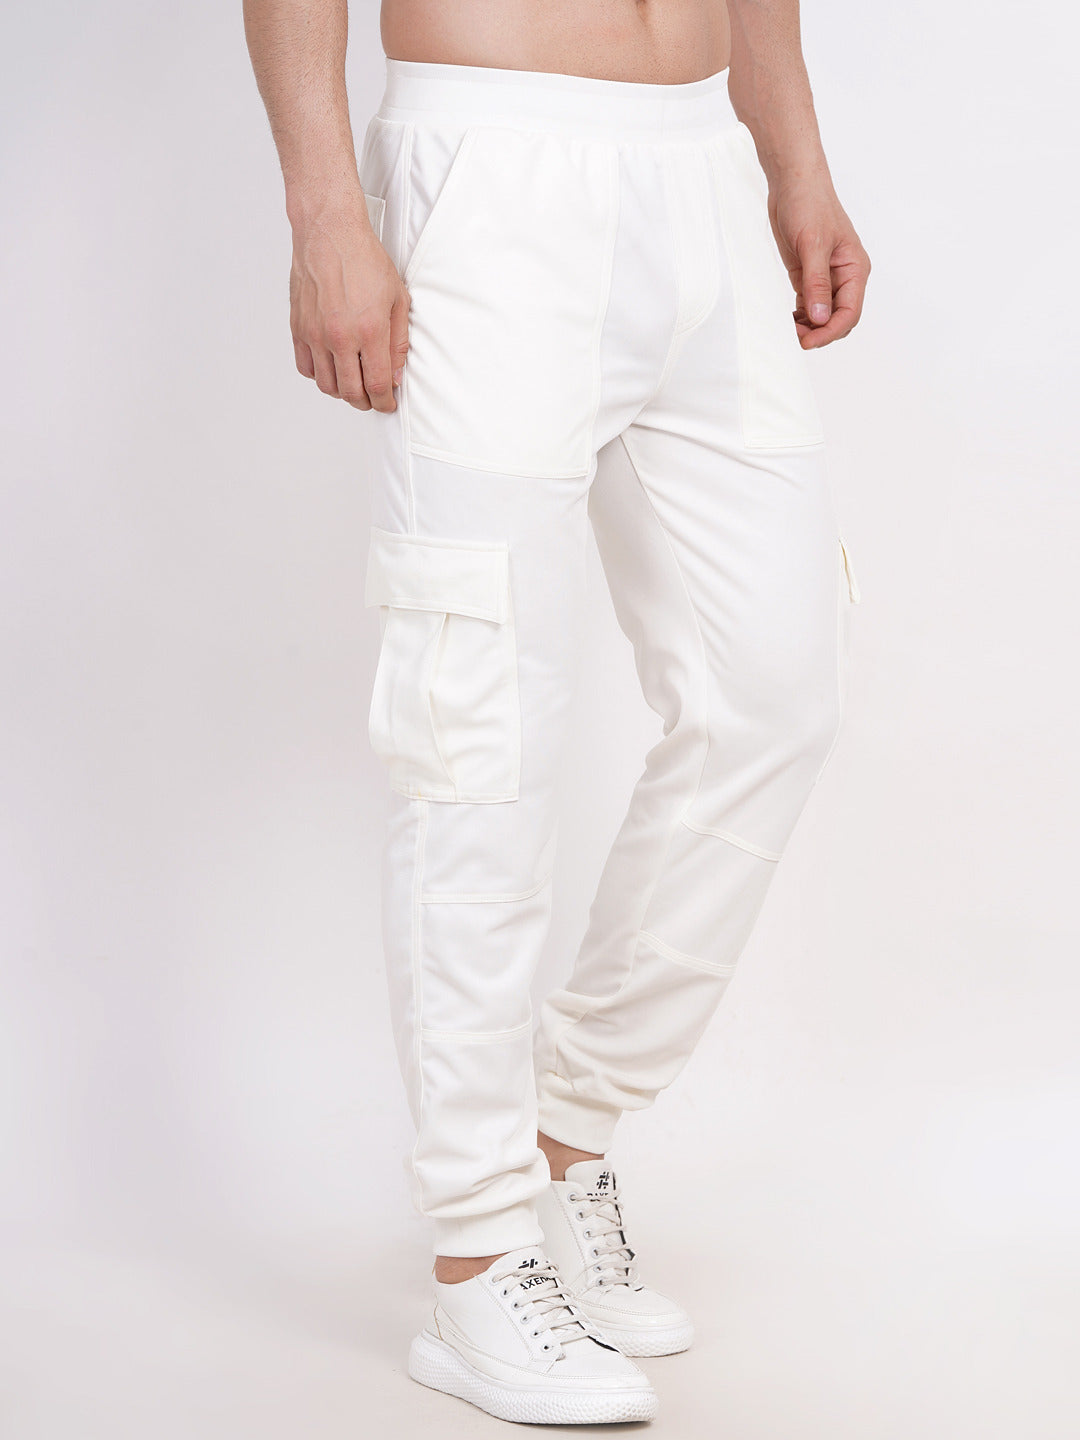 Buy 6 Pocket Cargo Pants, White Cargo Pants Mens